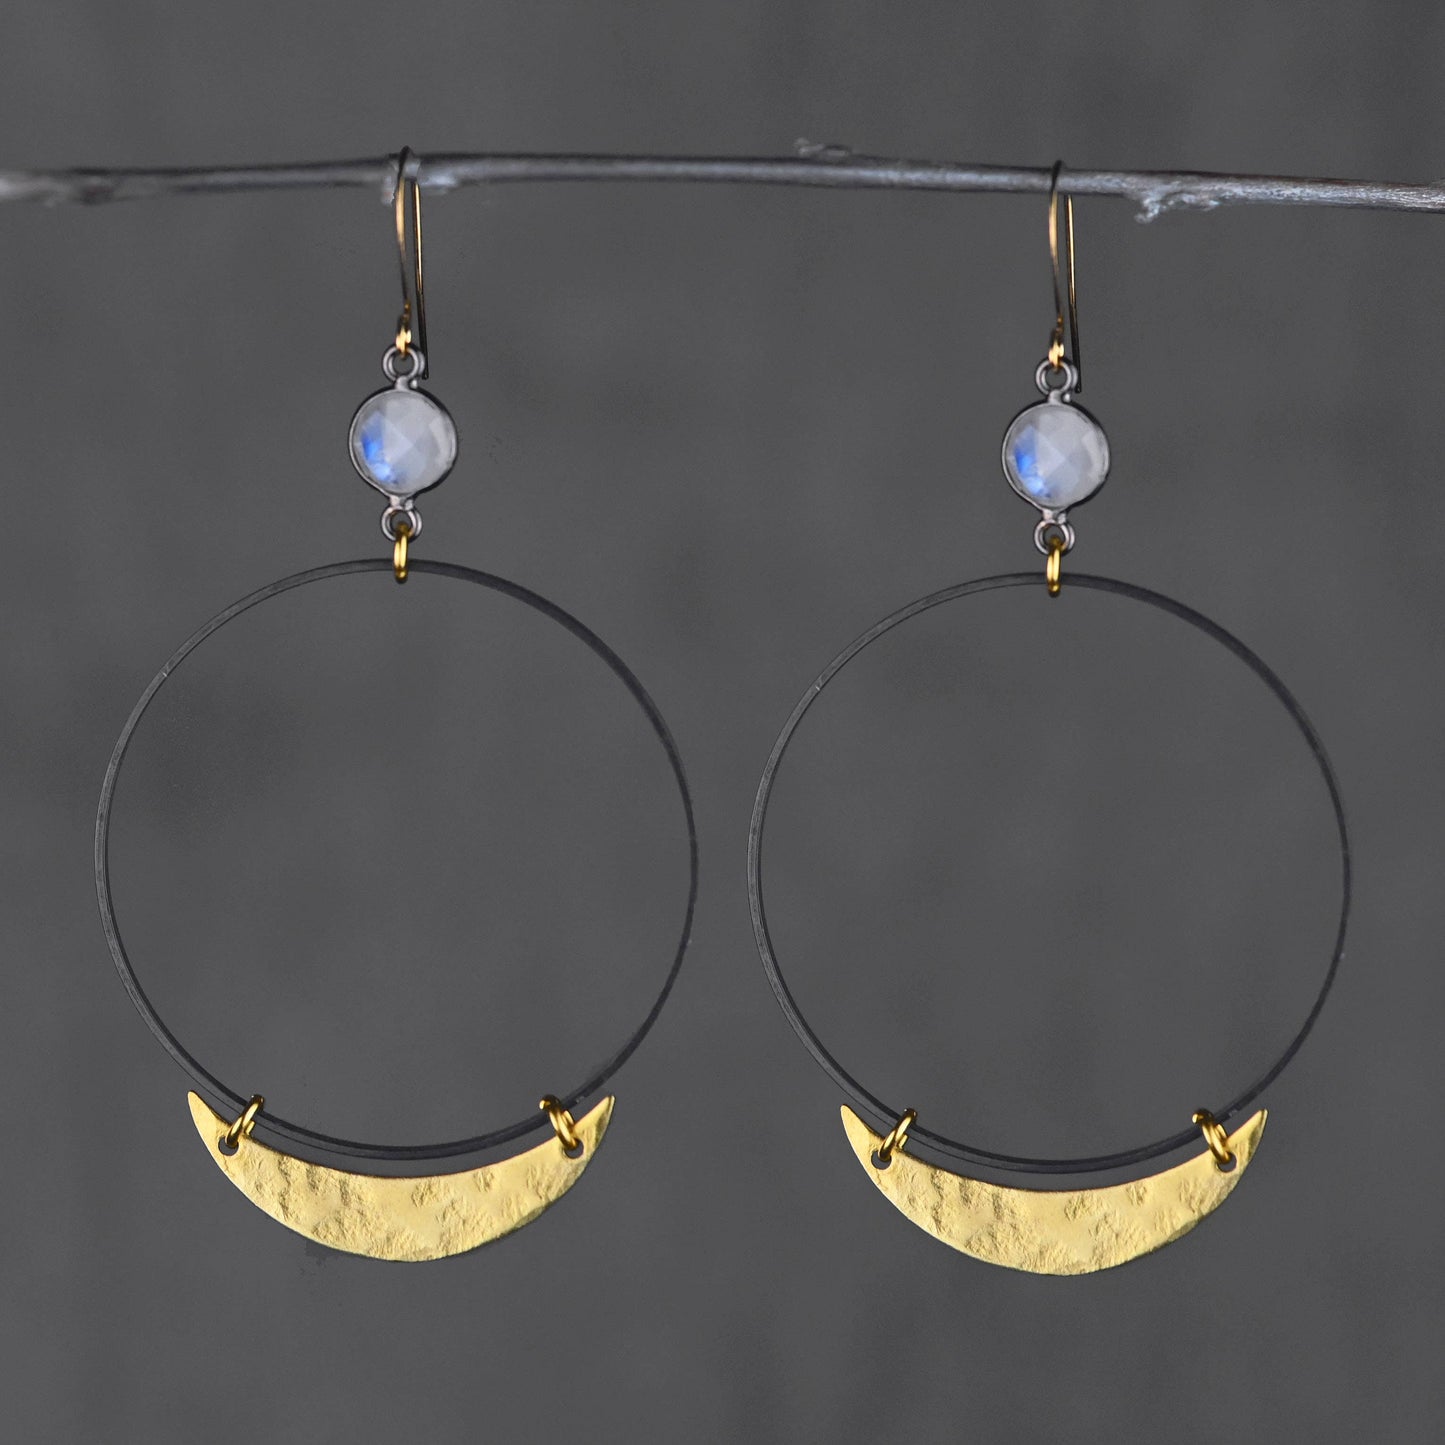 Black Hoop With Gem & Hammered Crescent Moon Earrings